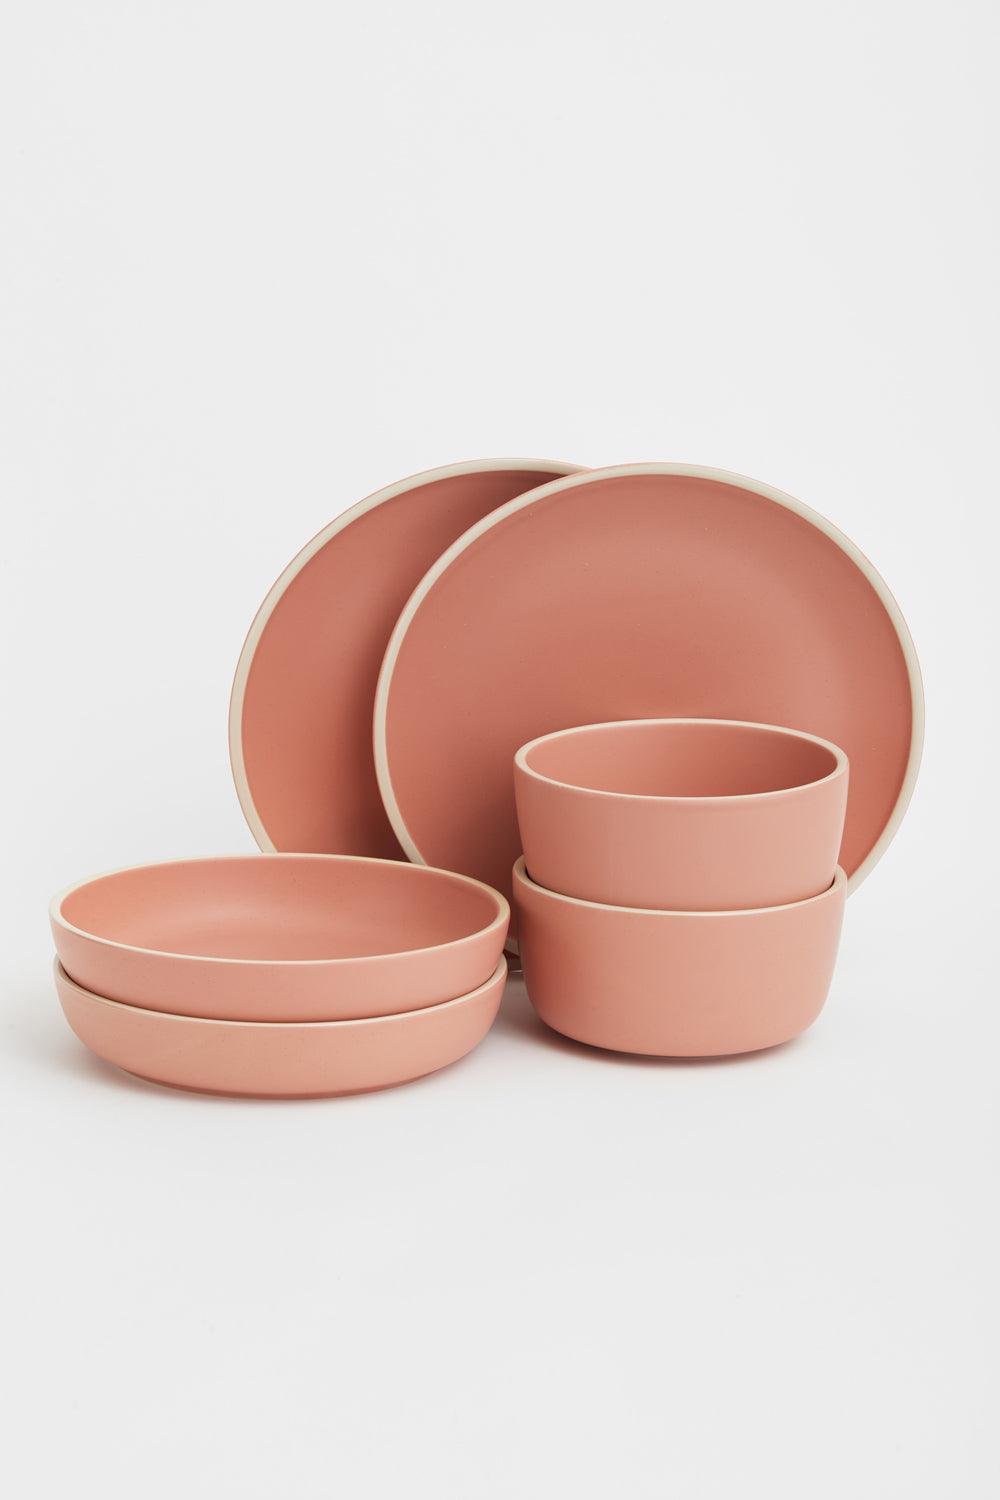 livingtaste ceramic dinnerware sets